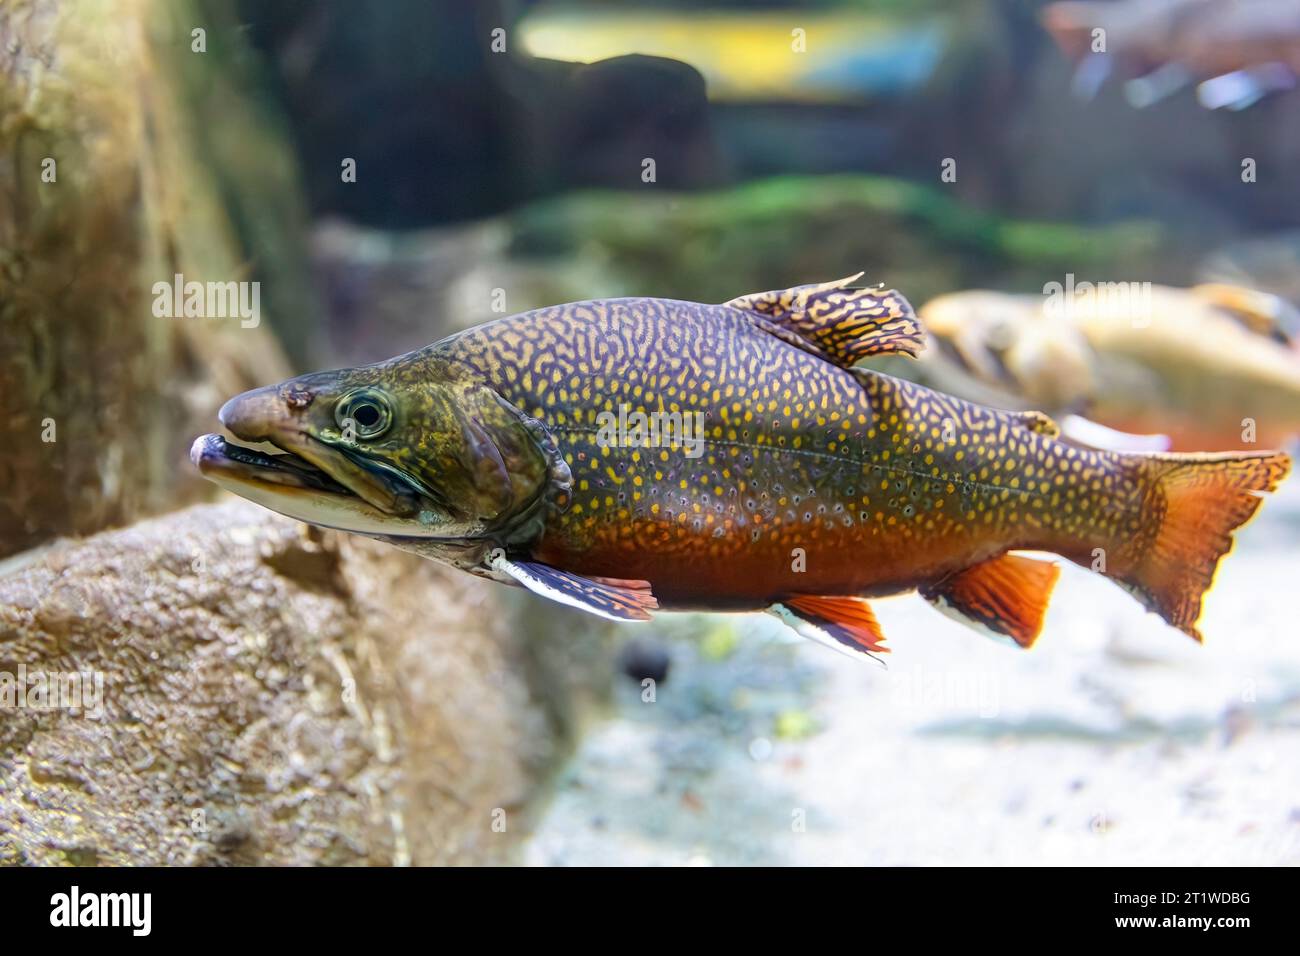 https://c8.alamy.com/comp/2T1WDBG/brook-trout-salvelinus-fontinalis-aka-eastern-brook-trout-speckled-trout-brook-charr-squaretail-brookie-mud-trout-2T1WDBG.jpg